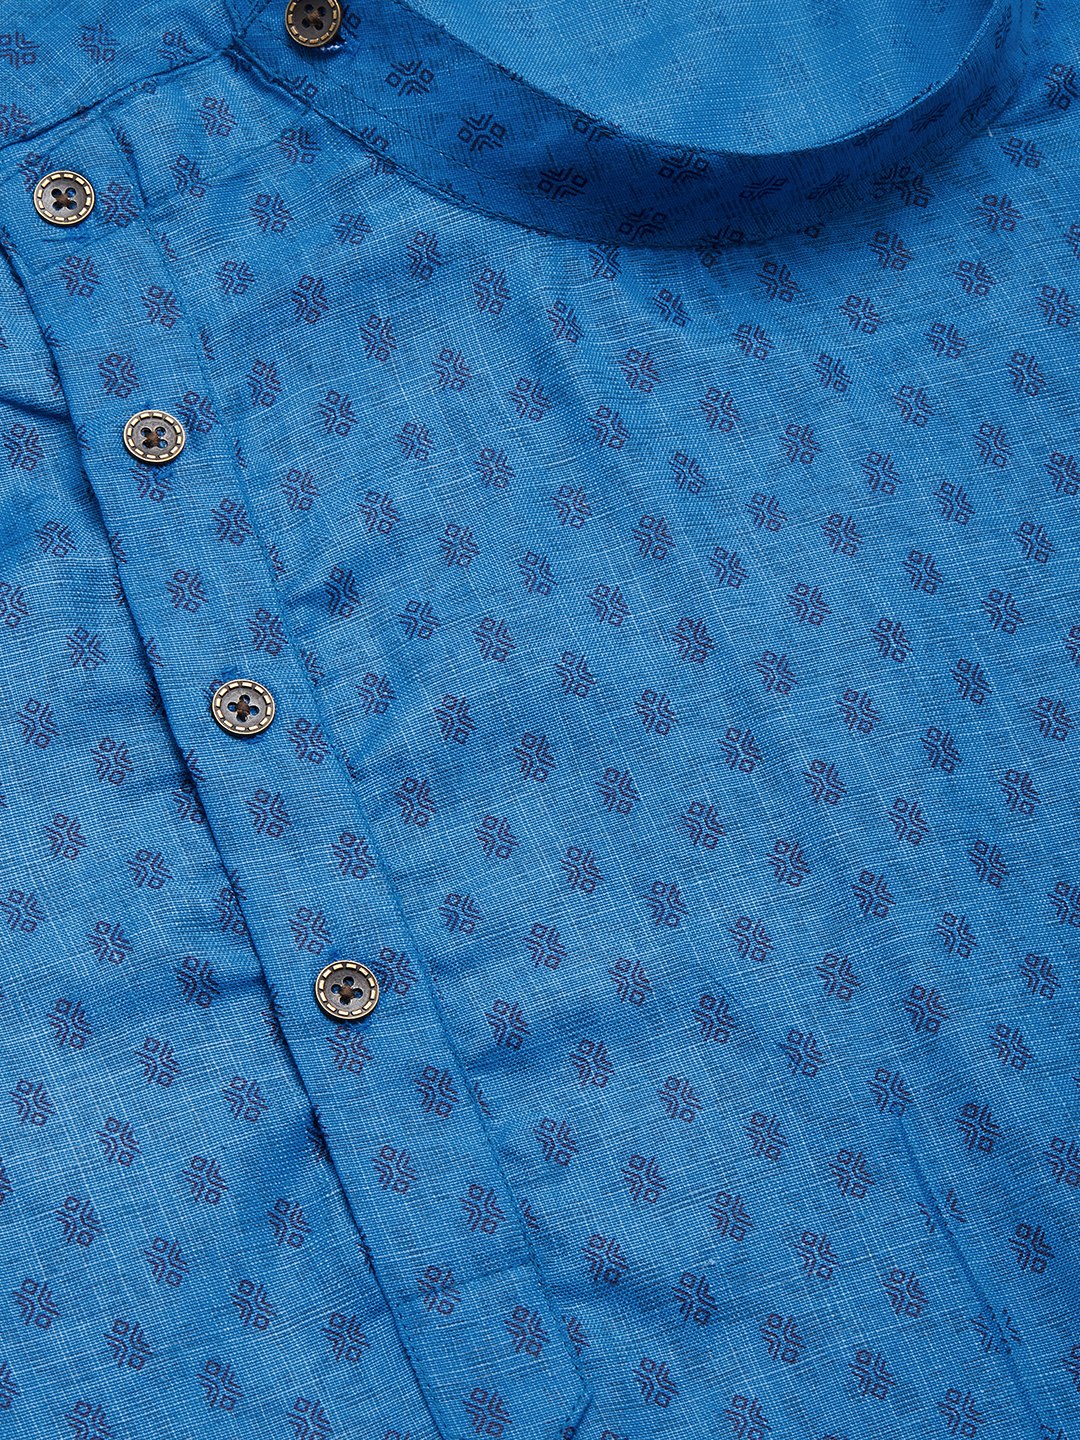 Jompers Men's Blue Cotton printed kurta Pyjama Set